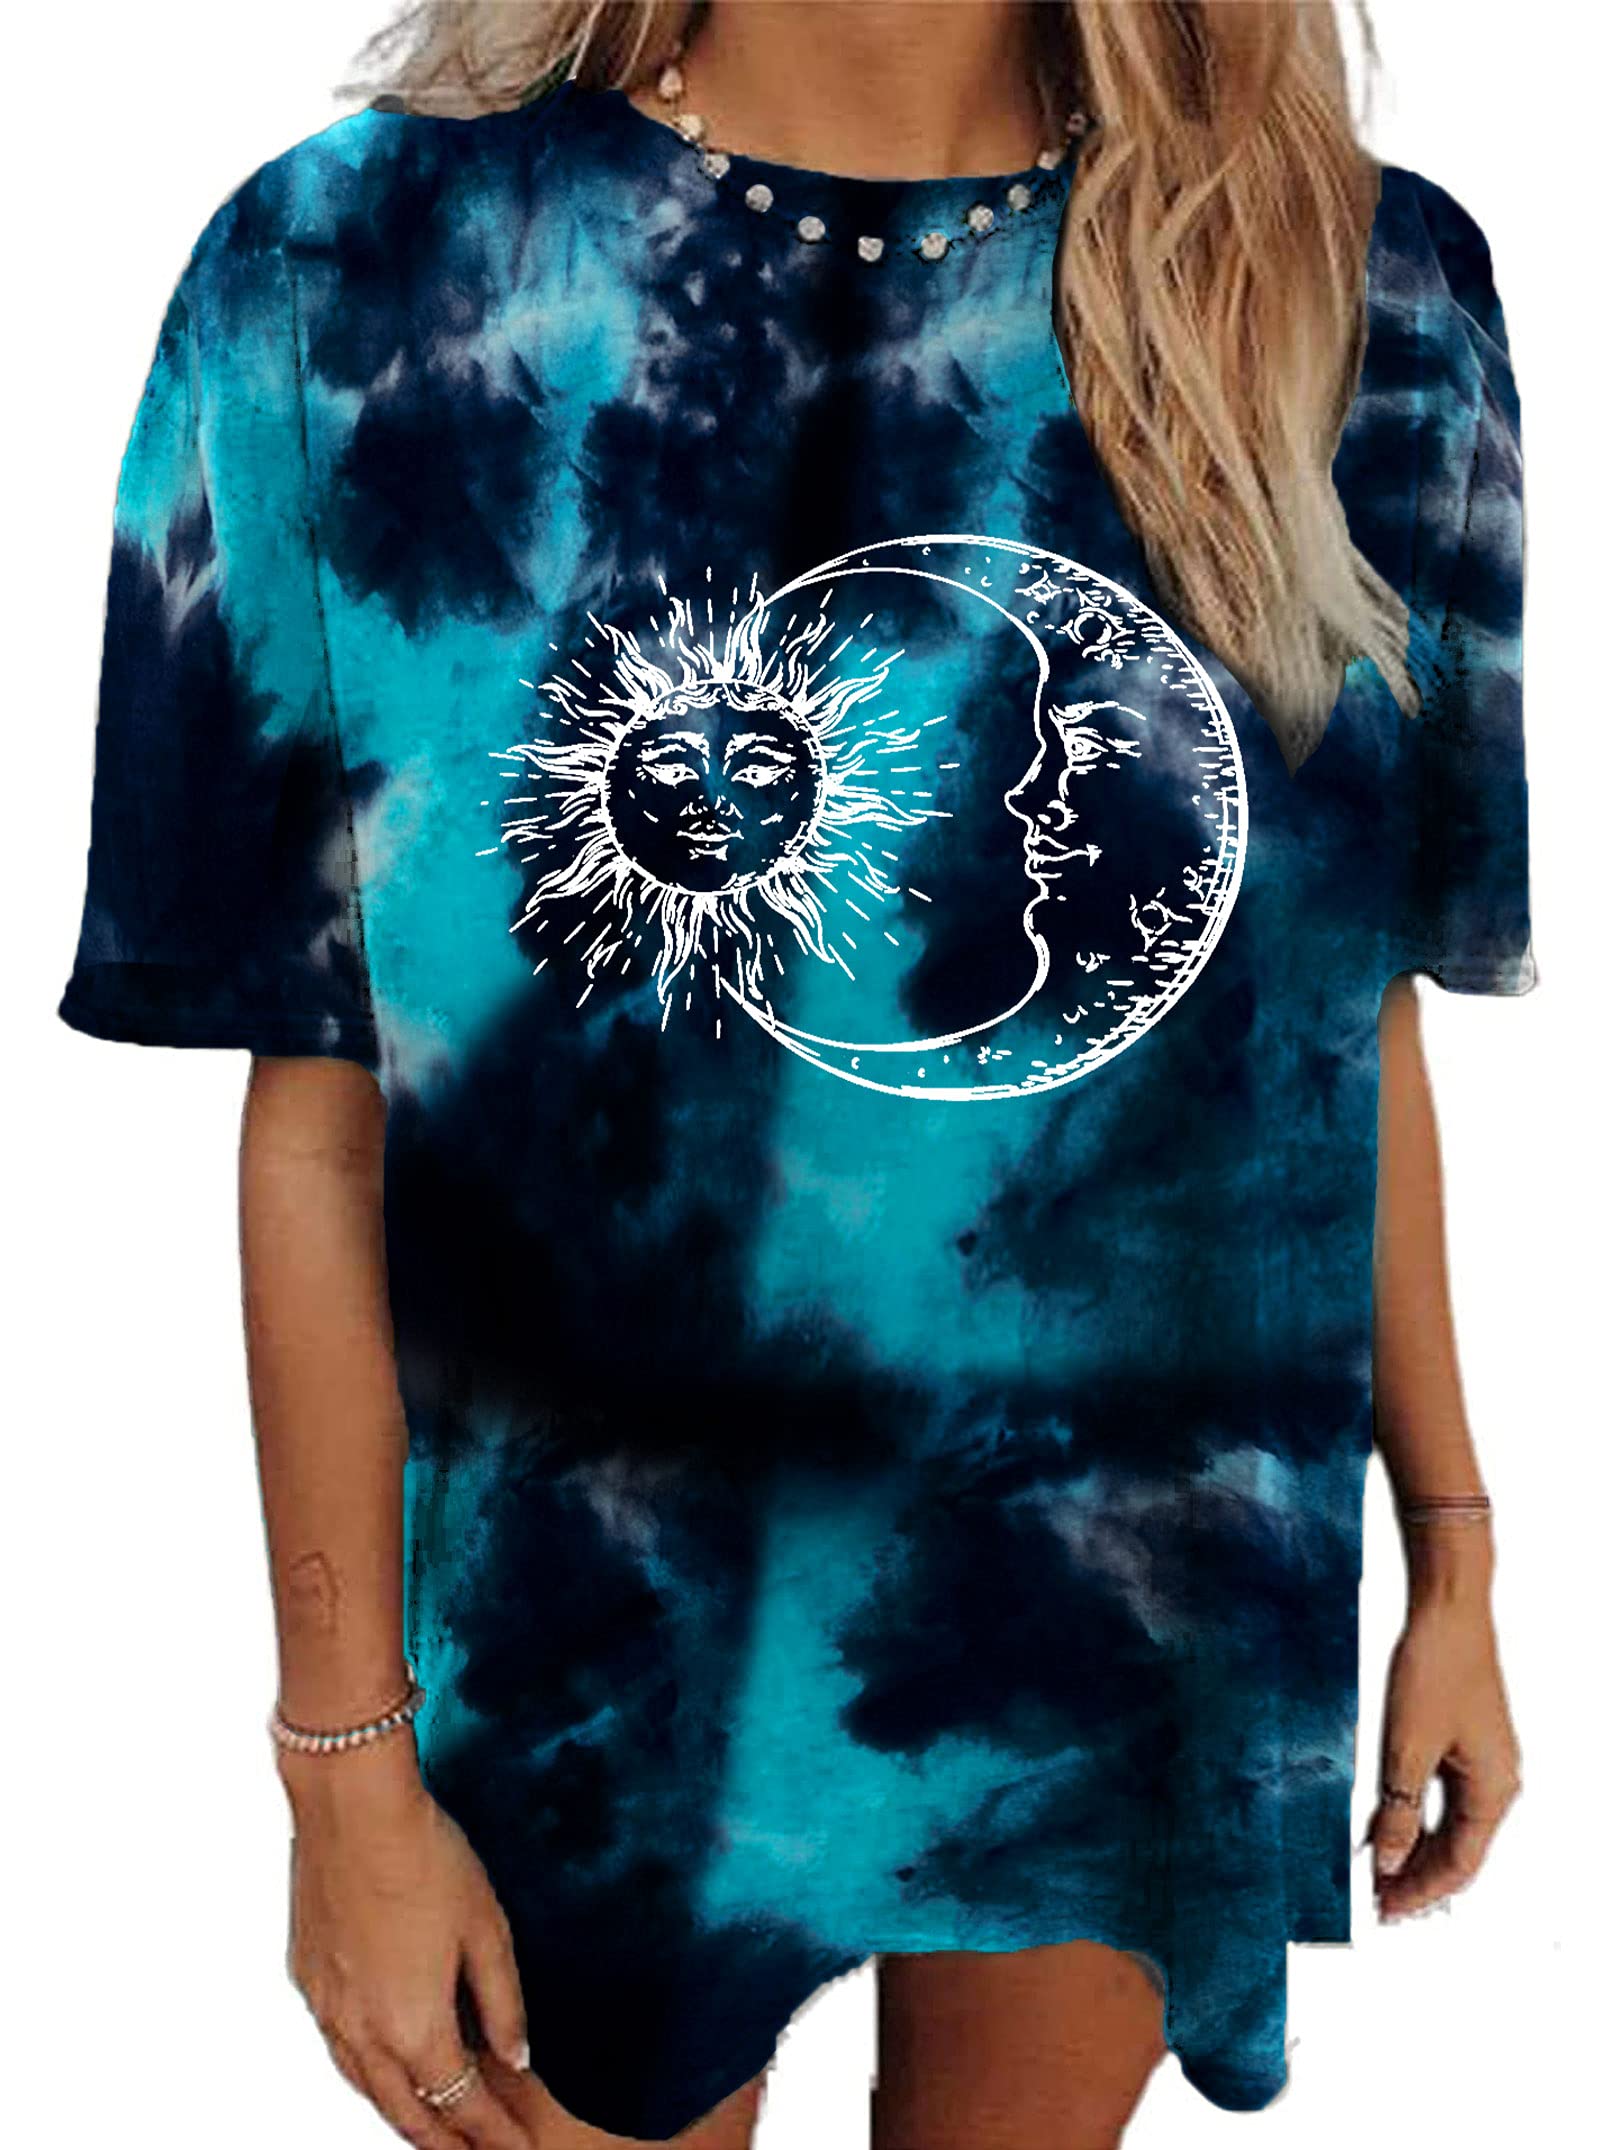 Remidoo Womens Short Sleeve Sun And Moon Print Tie Dye T-Shirt Top Casual Tees Darkcyan Small